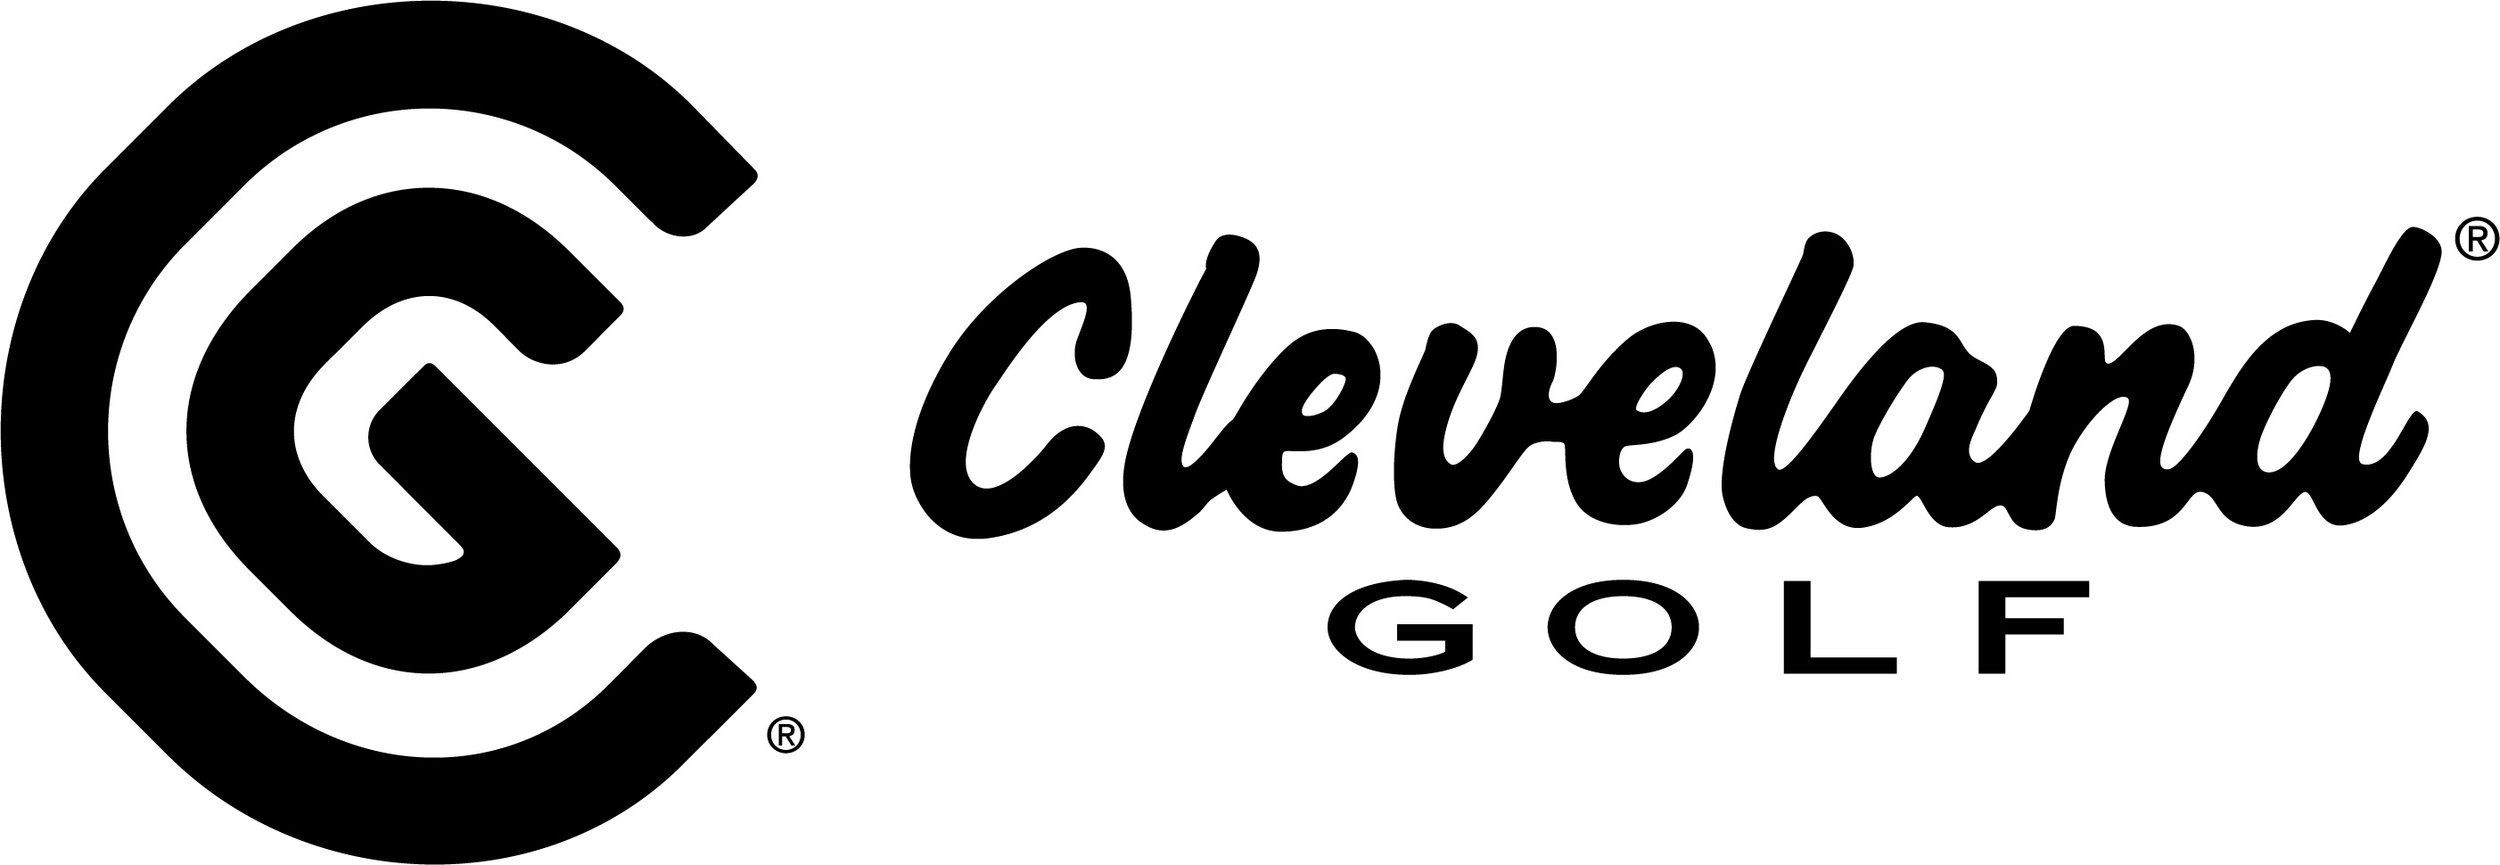 Cleveland Golf.jpg